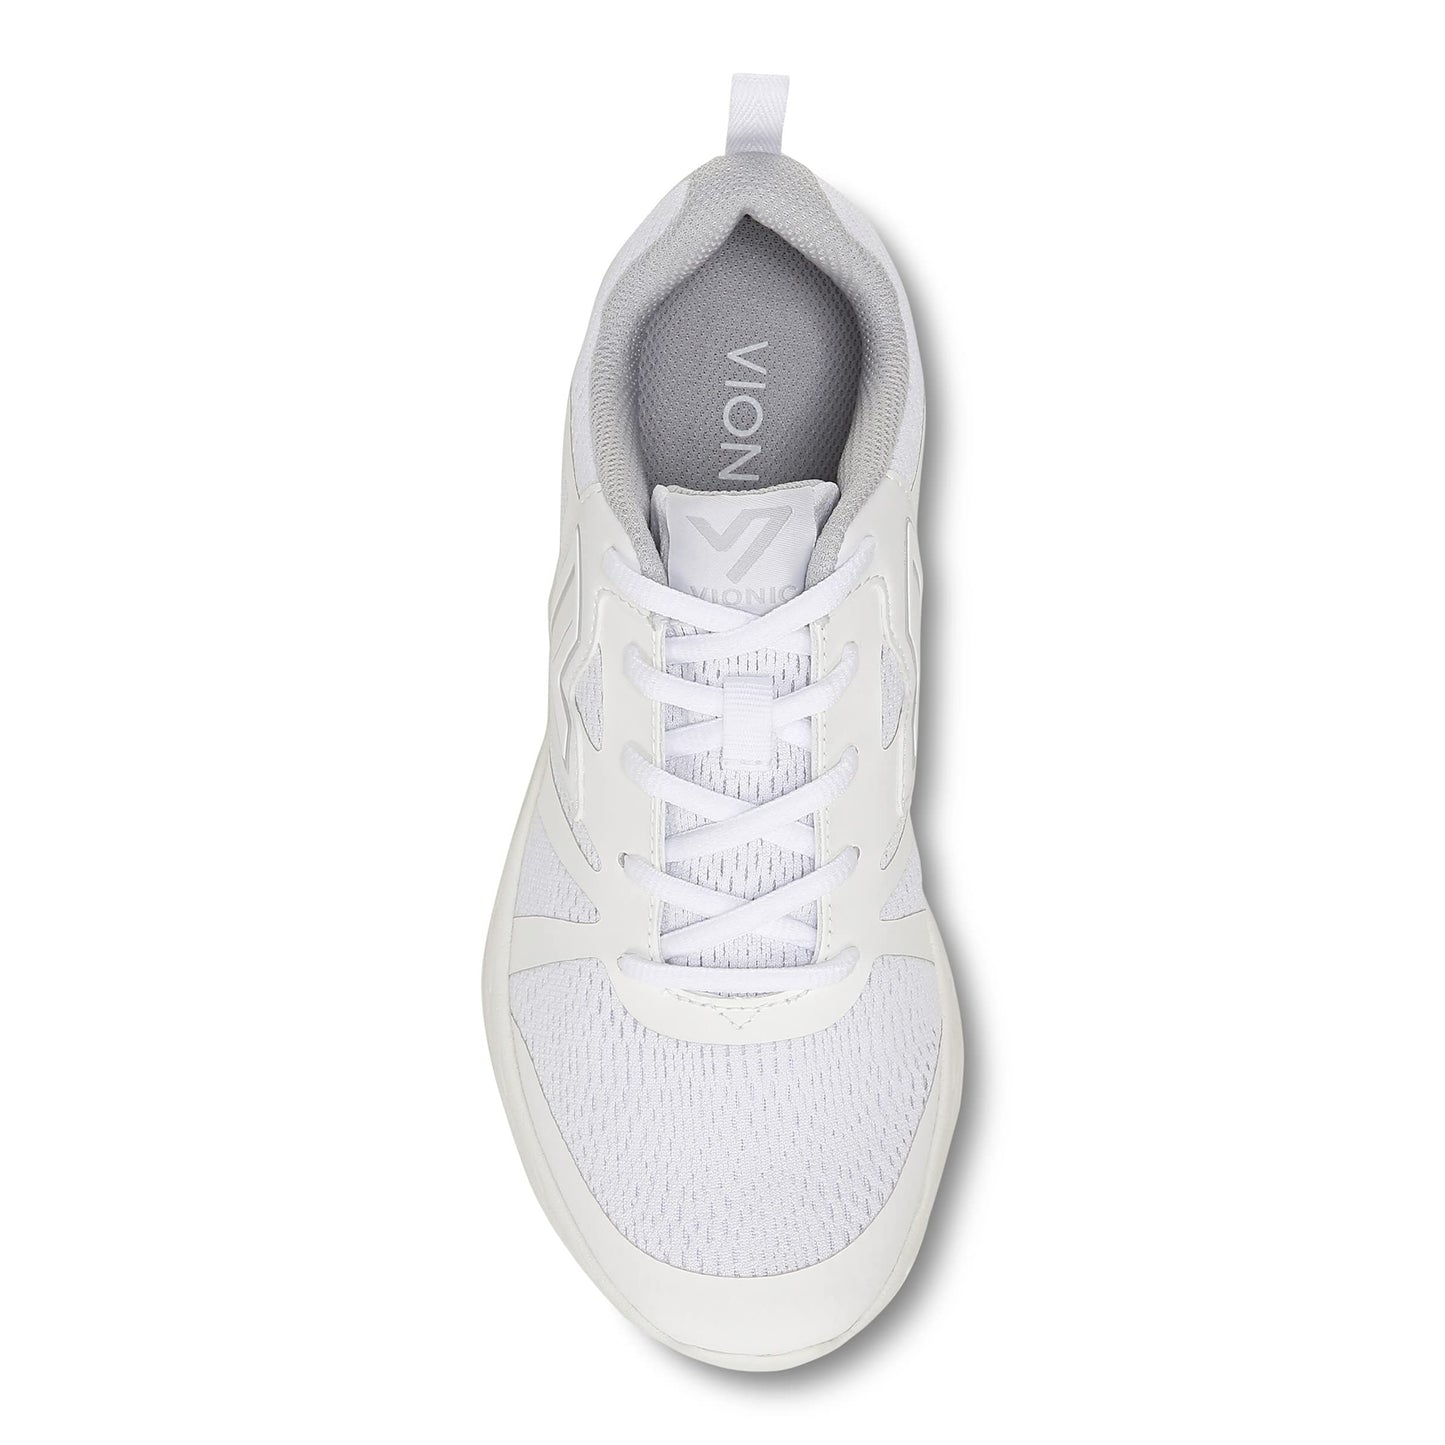 Vionic Women's, Miles Sneaker White 7.5 M